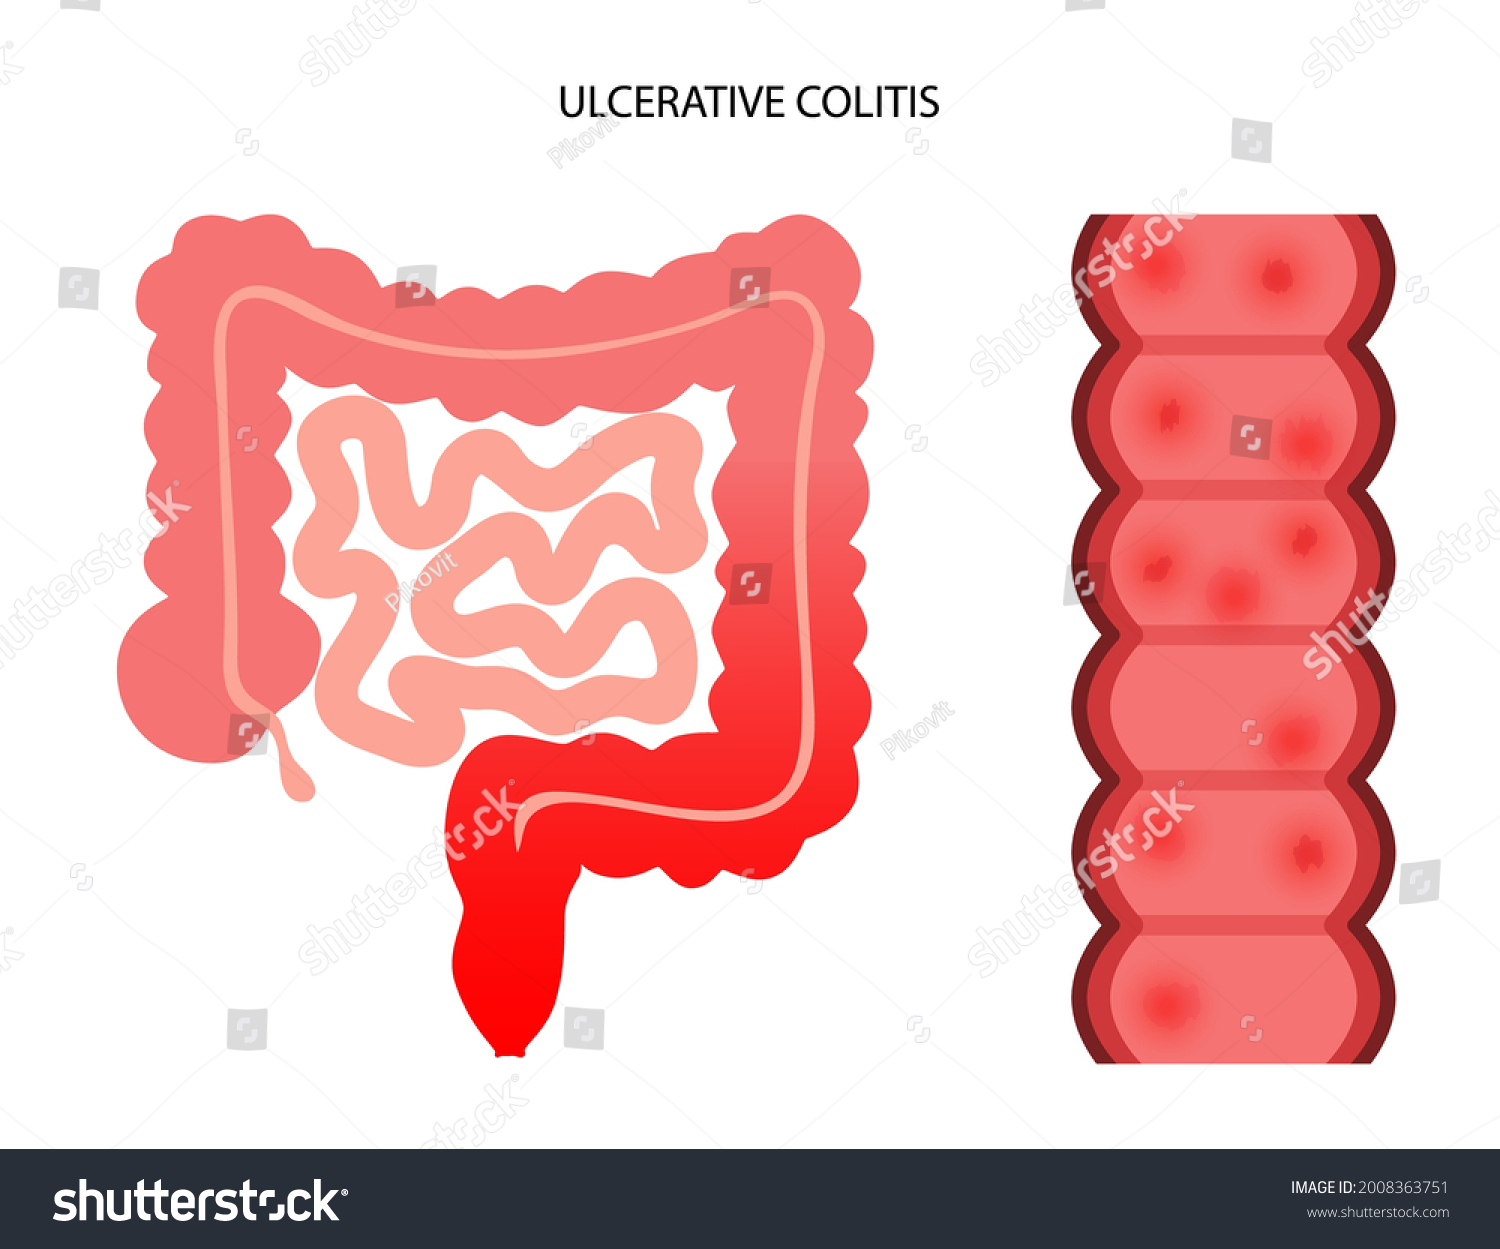 Ulcerative Colitis Concept Inflammatory Bowel Disease Stock Vector Royalty Free 2008363751 0670